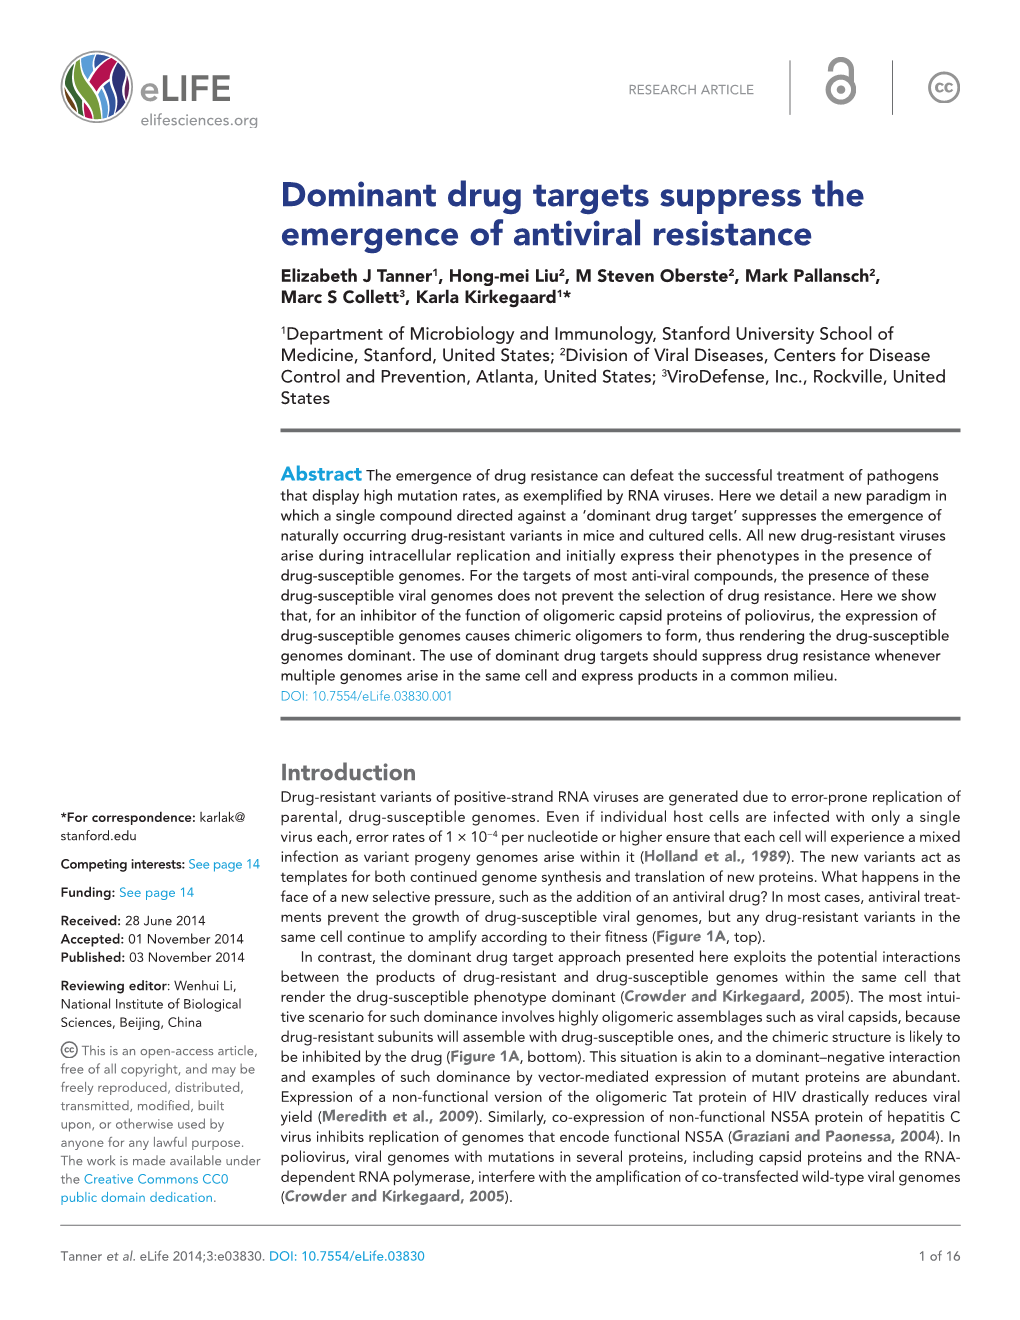 Dominant Drug Targets Suppress the Emergence of Antiviral Resistance